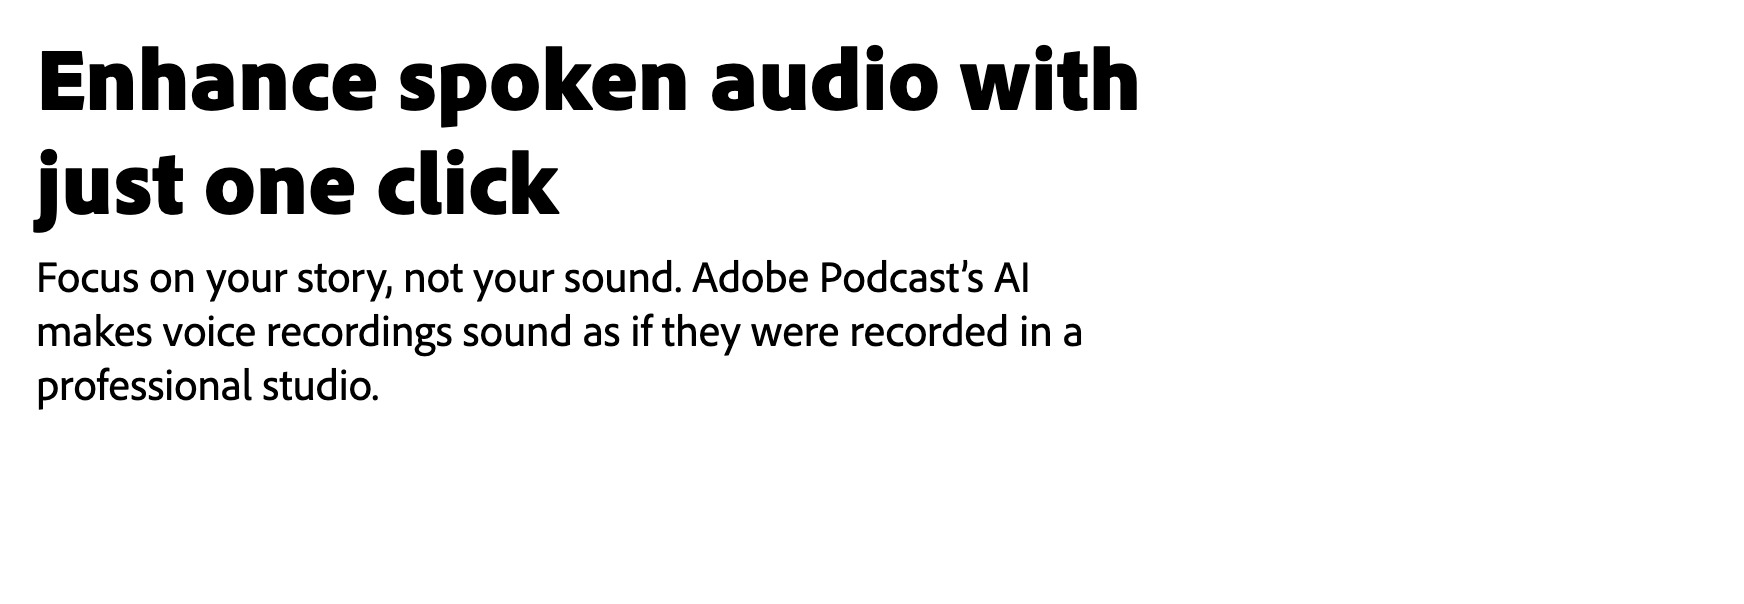 Adobe Podcast